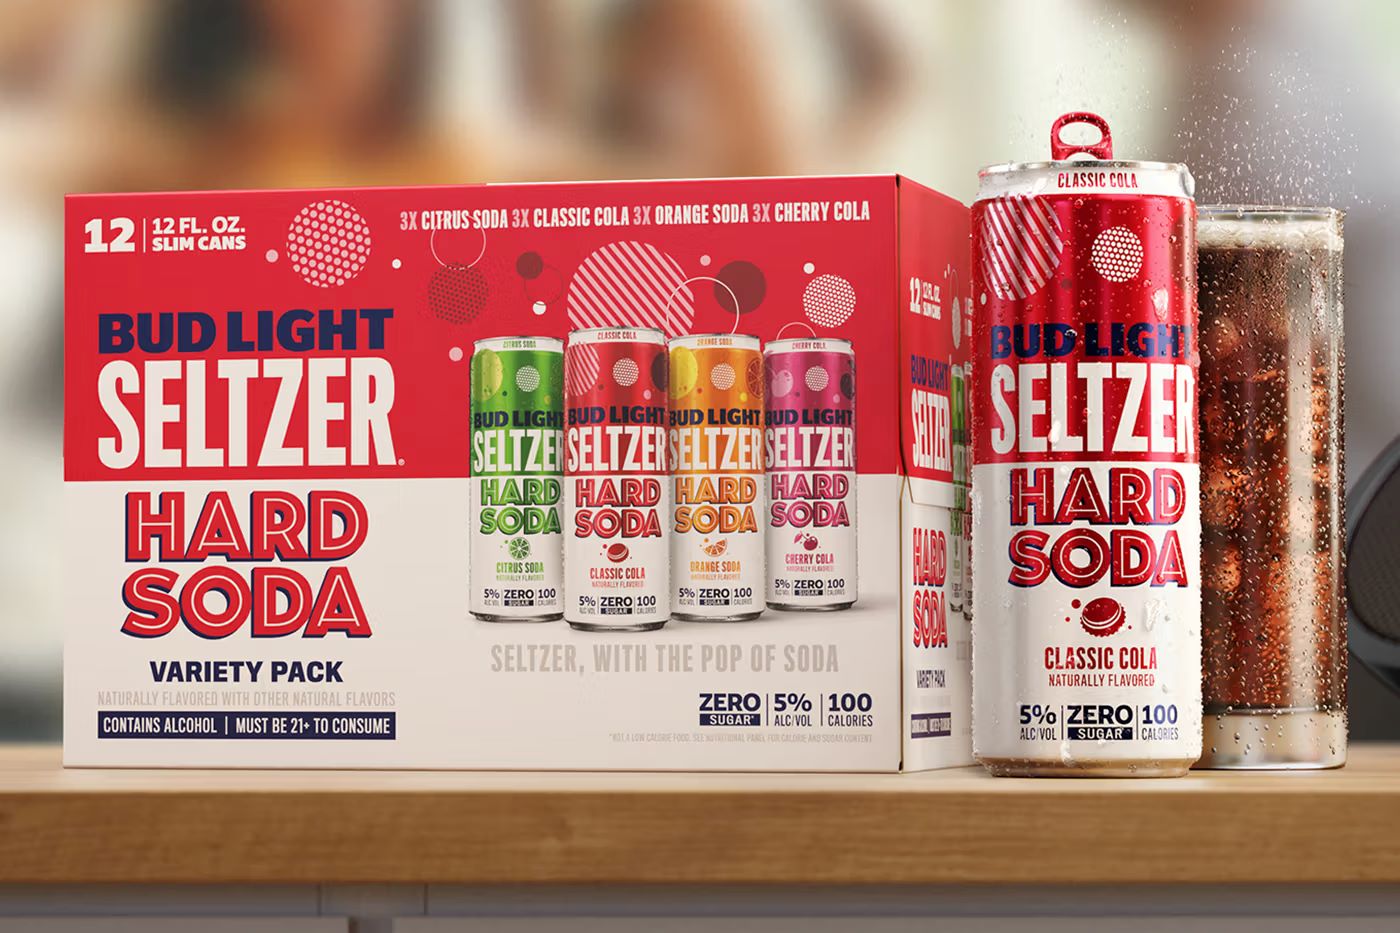 20-bud-light-seltzer-hard-soda-nutrition-facts